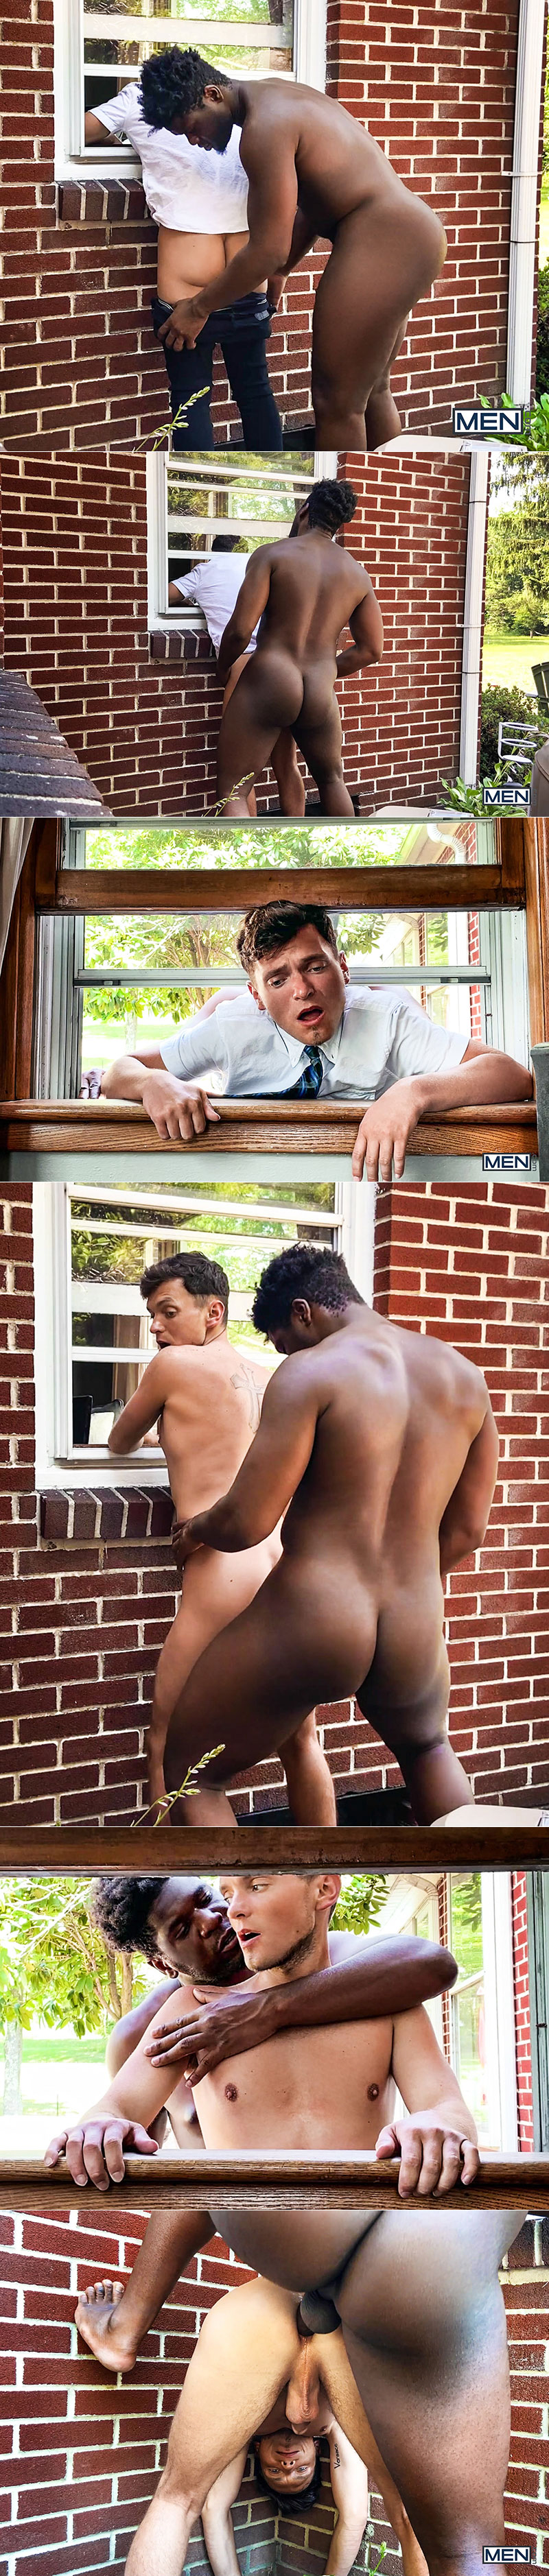 Men.com: Ty Shine bangs Bruno Cartella bareback in "Stuck in the Window"